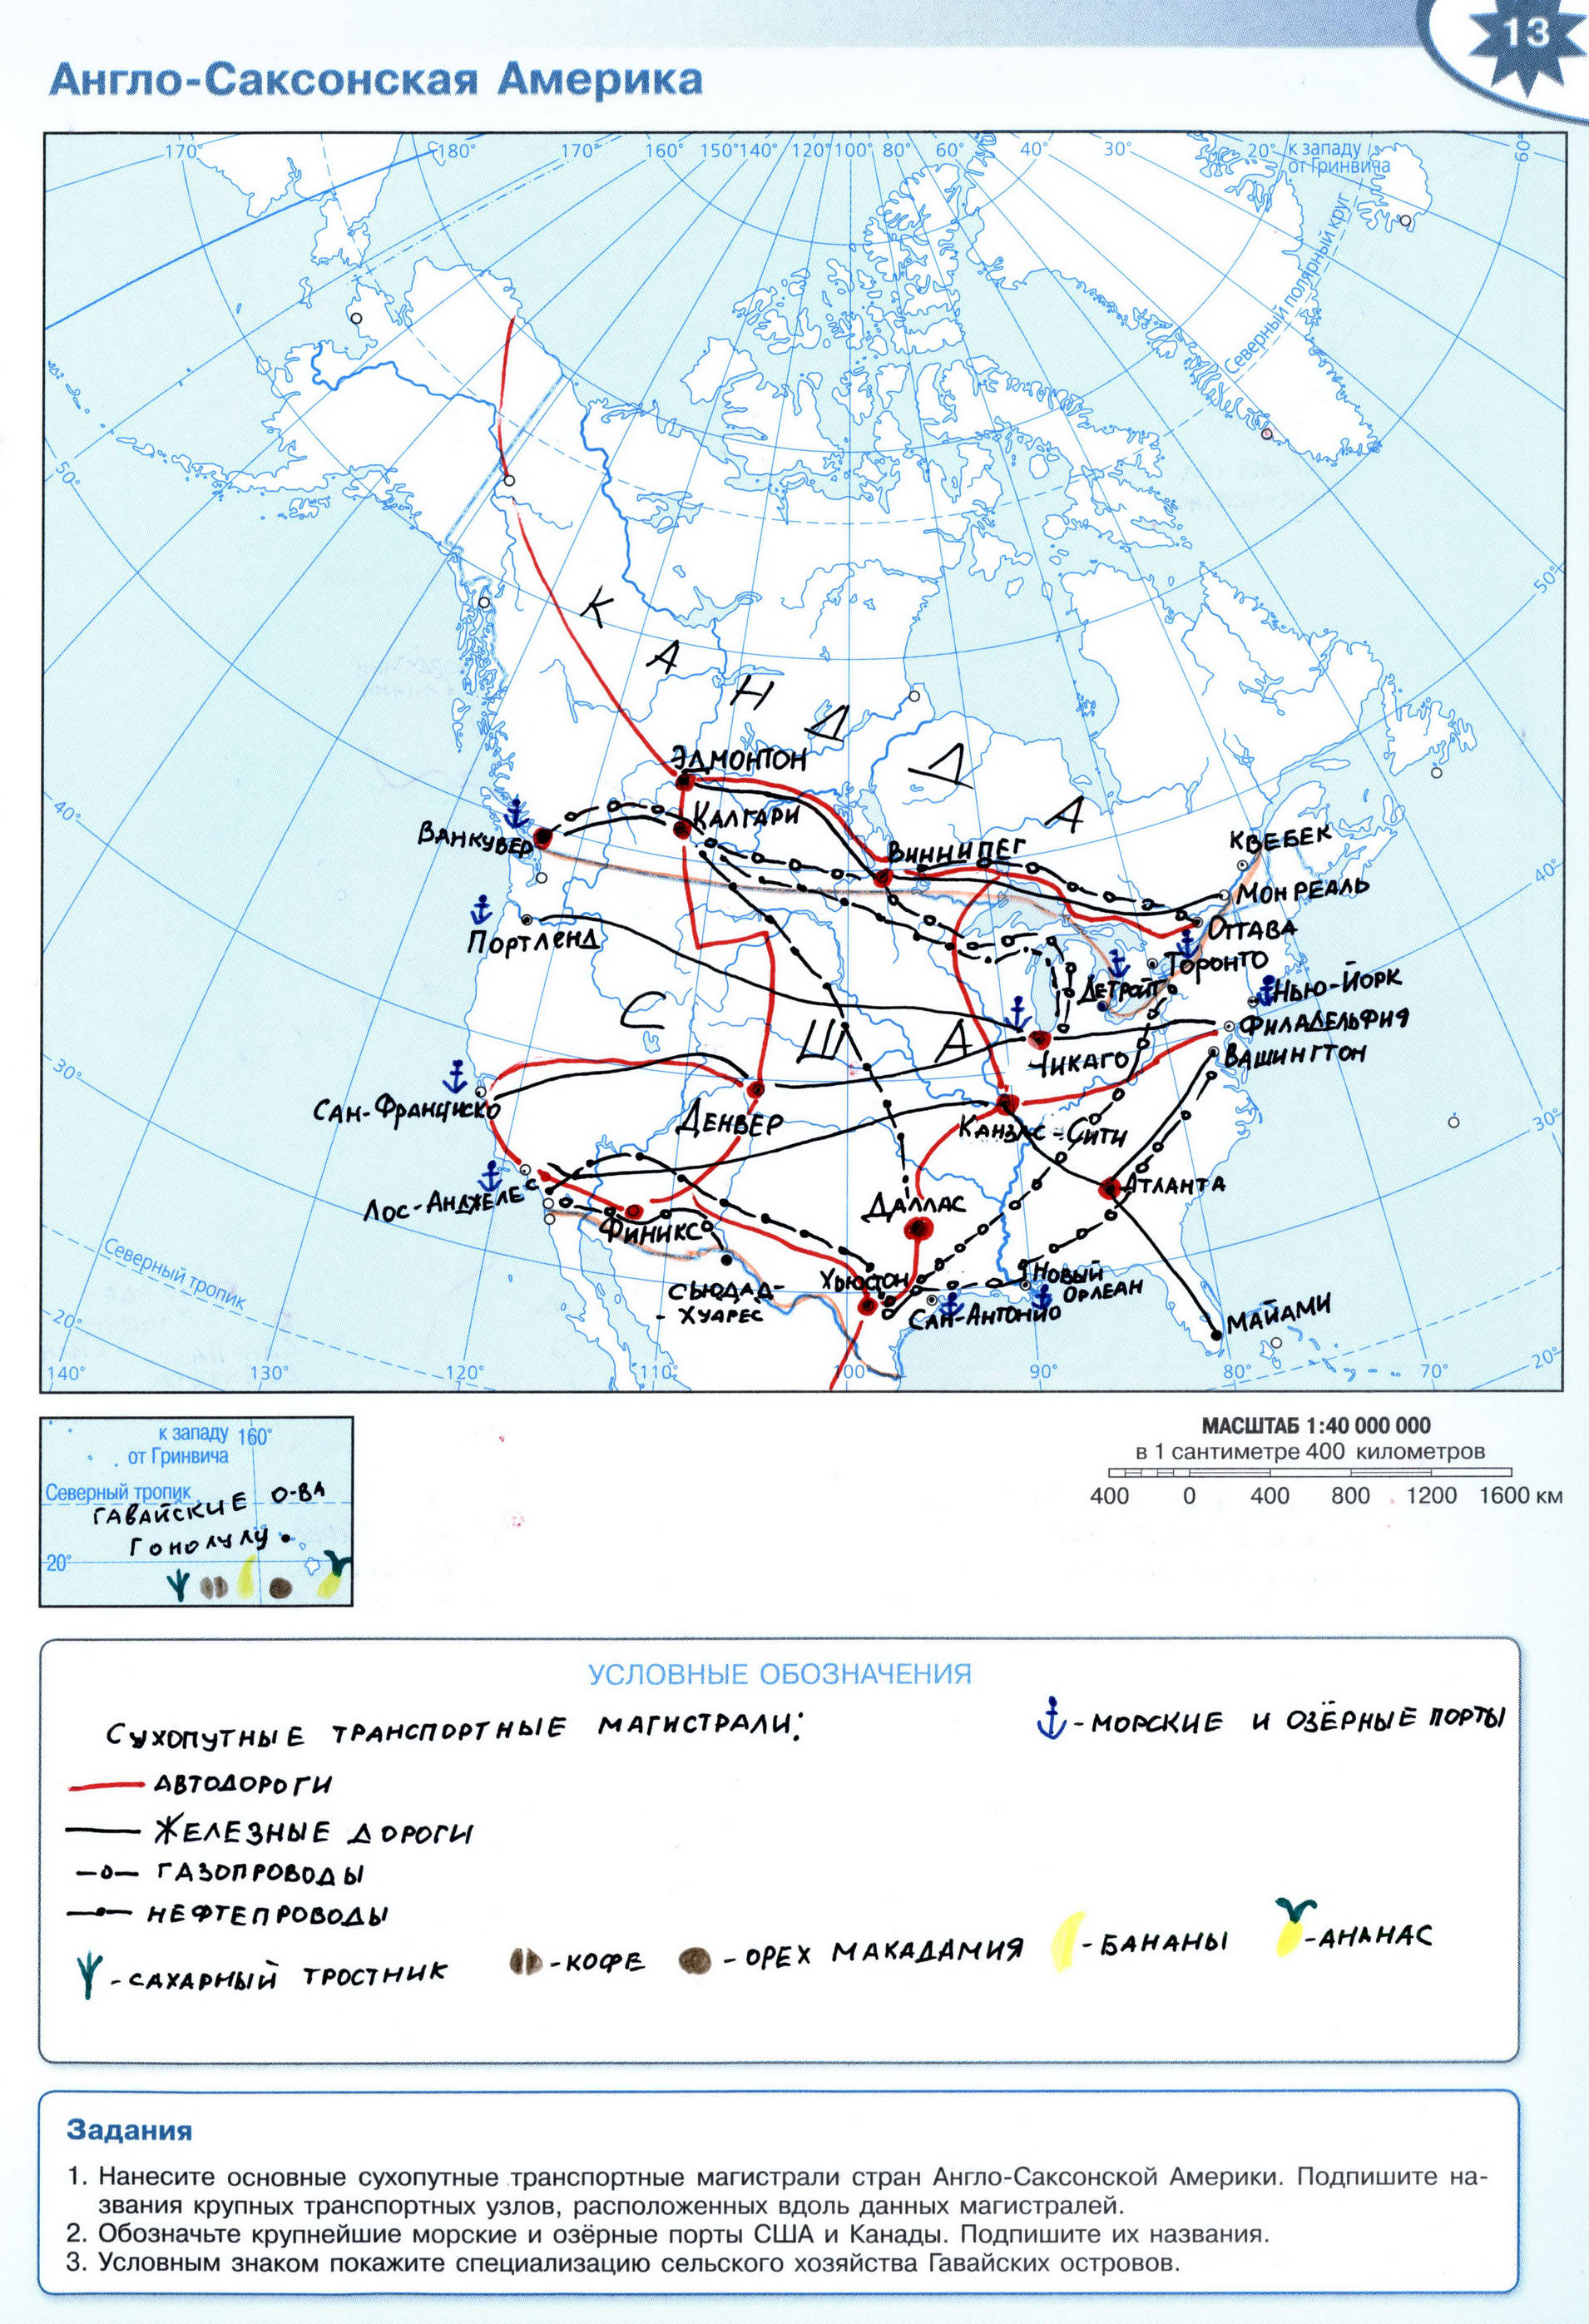 ГДЗ англо-саксонская америка контурная карта 10-11 класс